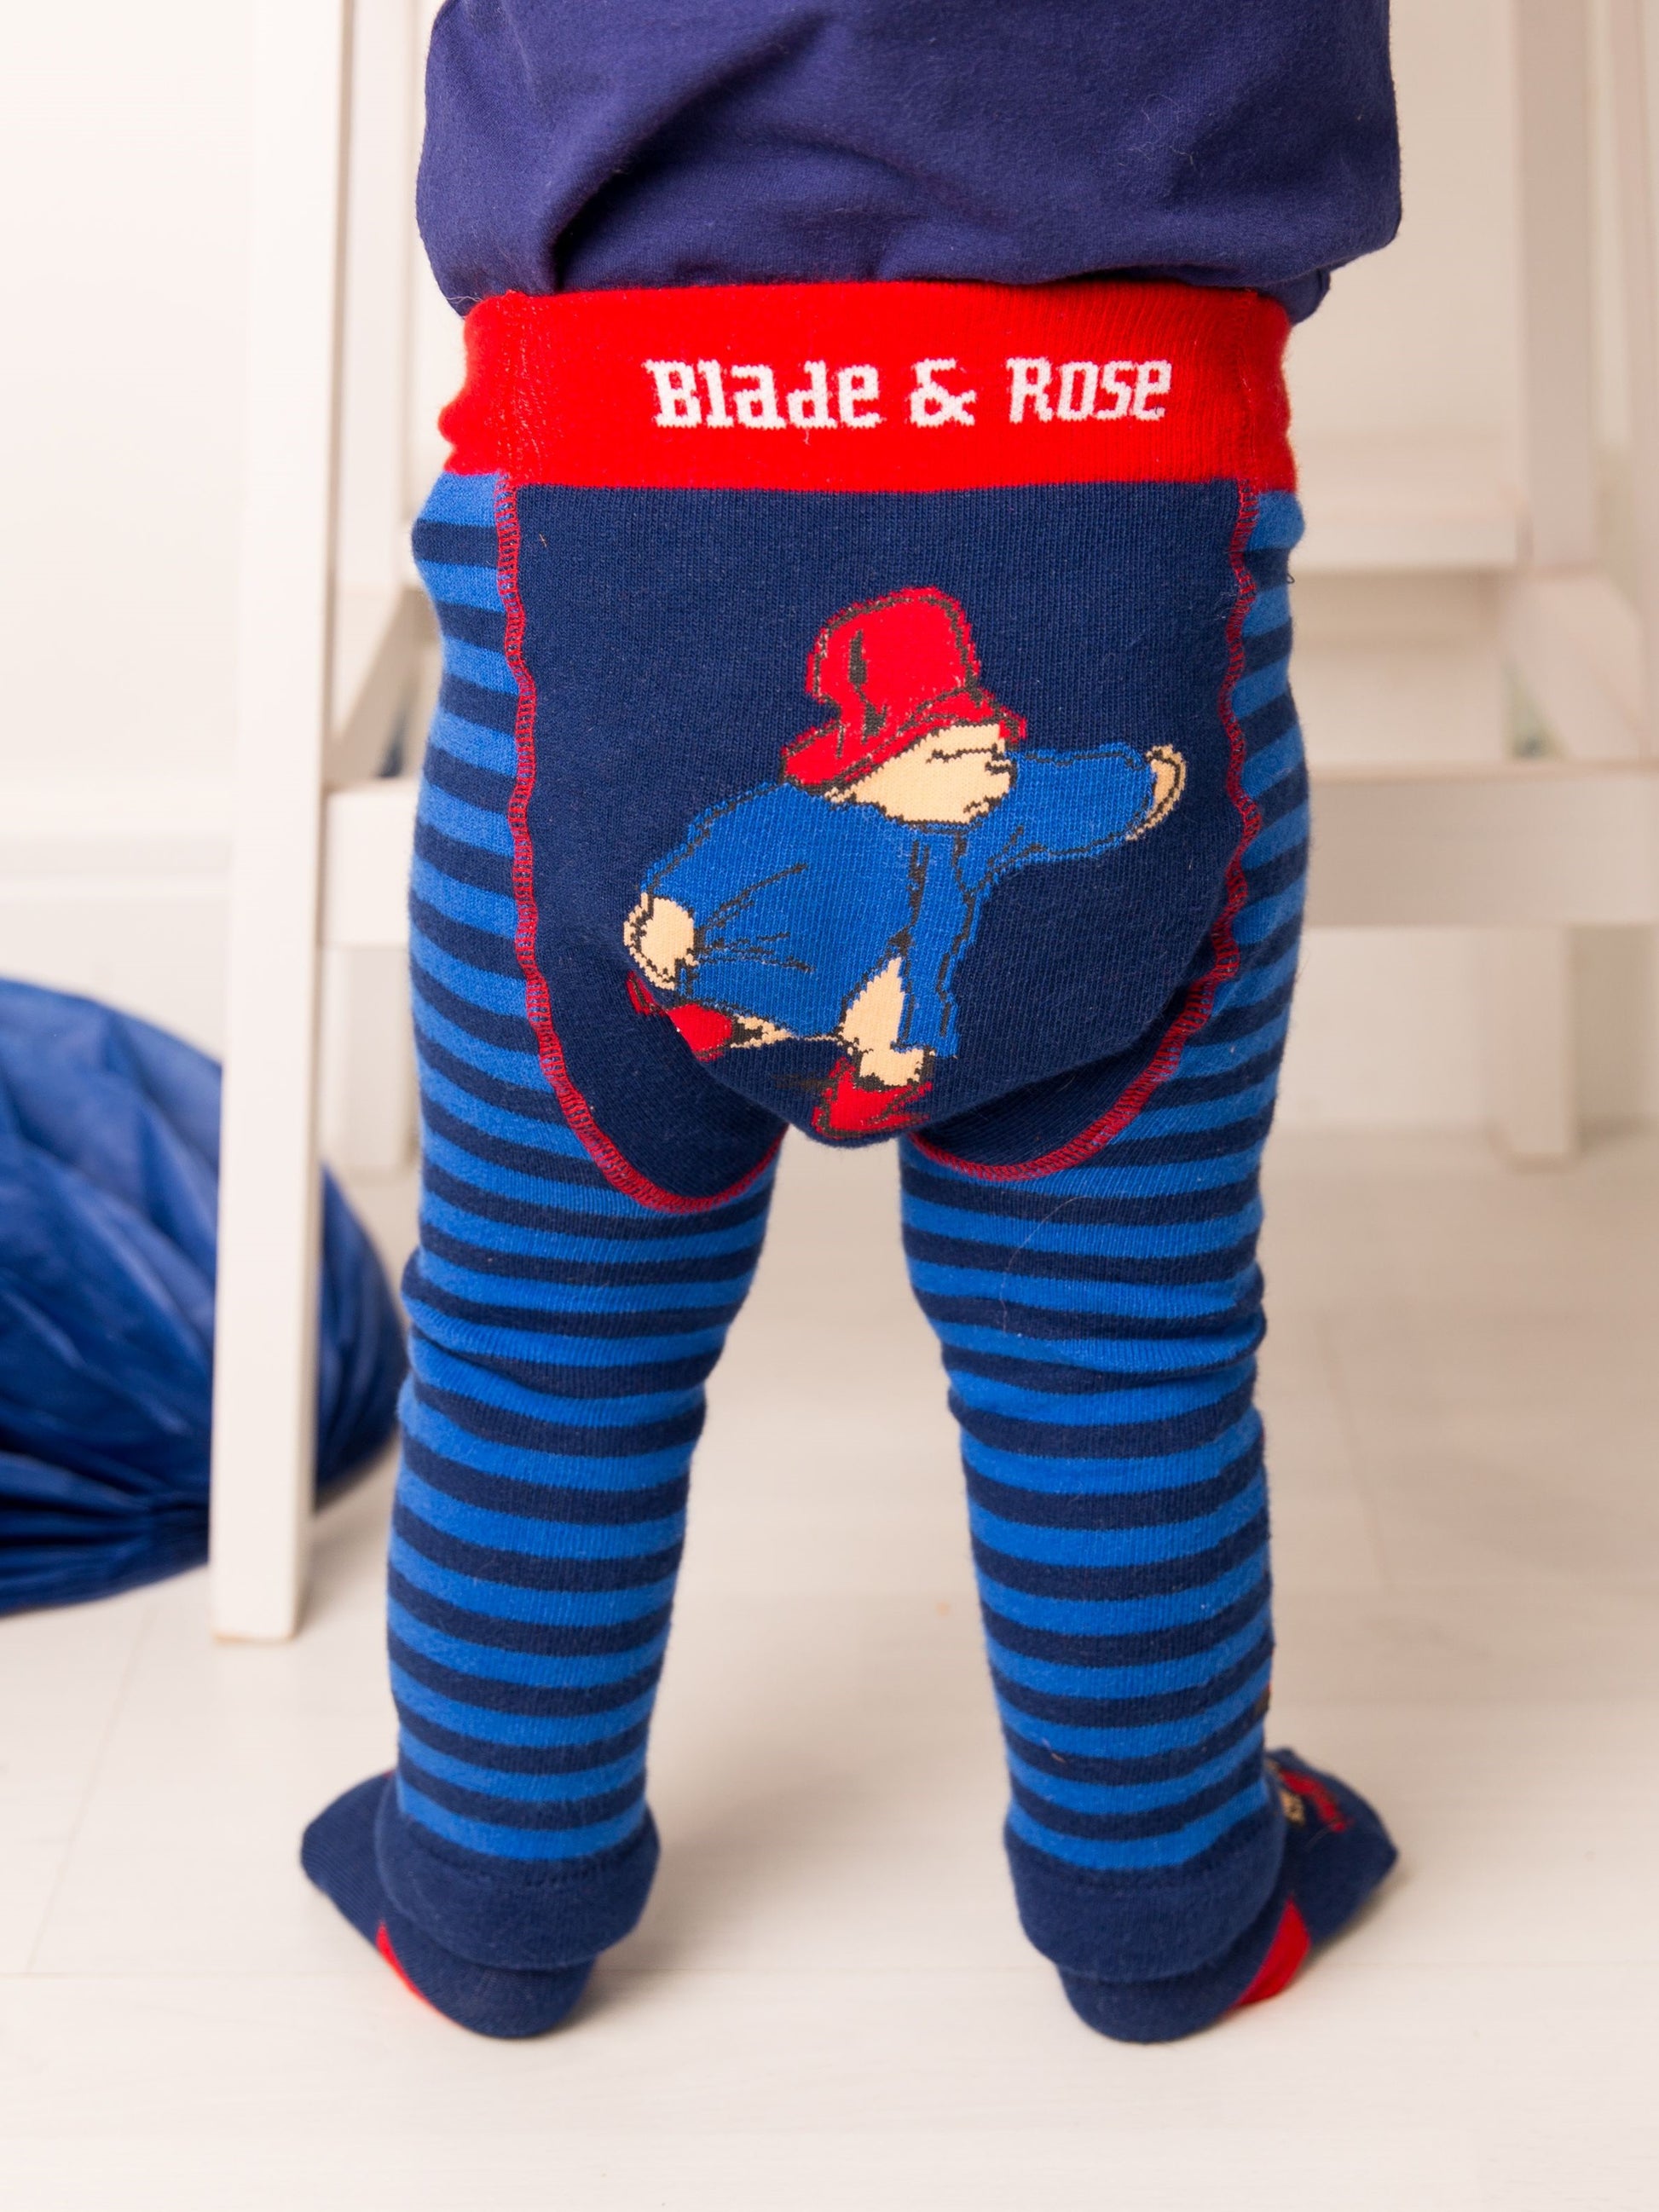 blade & rose paddington leggings at whippersnappers online